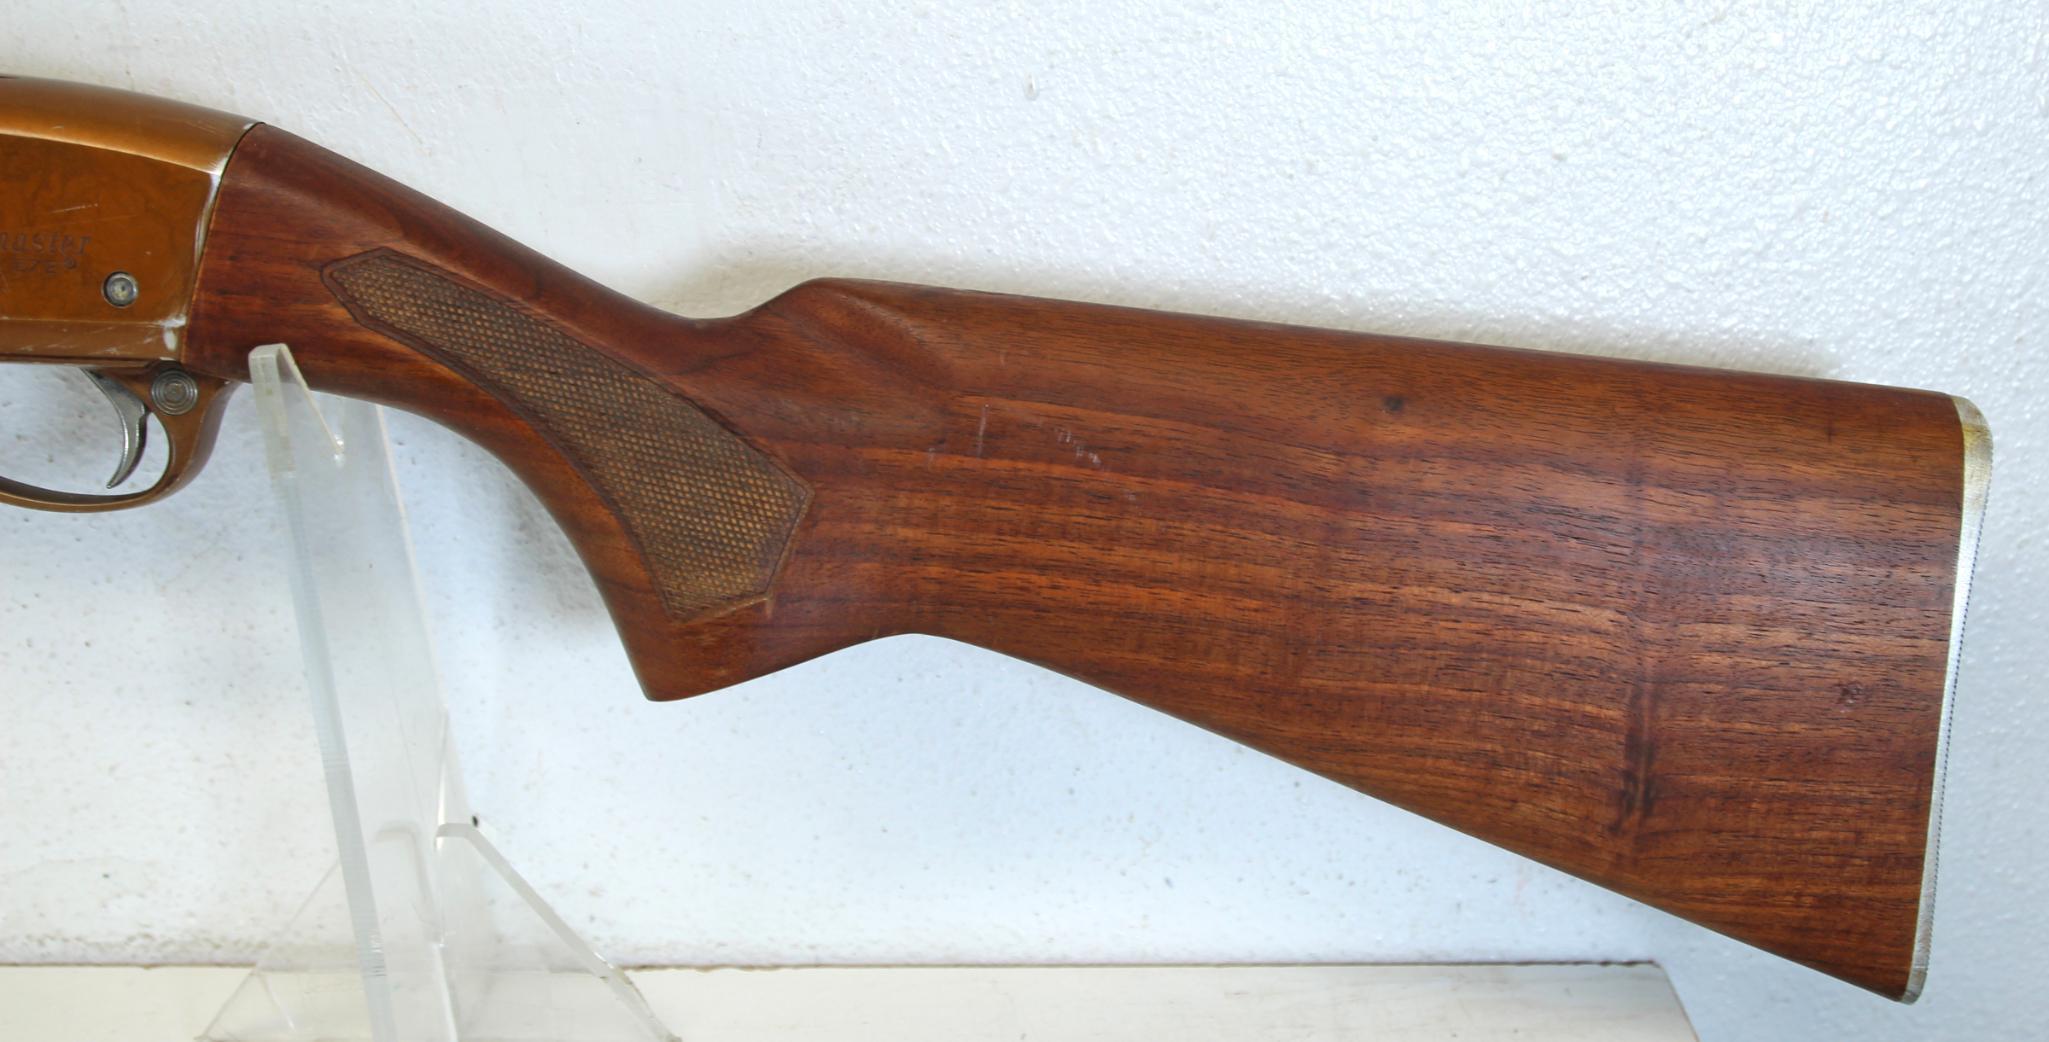 Remington Model 572 Buckskin Tan .22 S,L,LR Pump Action Rifle These lightweight aluminum alloy